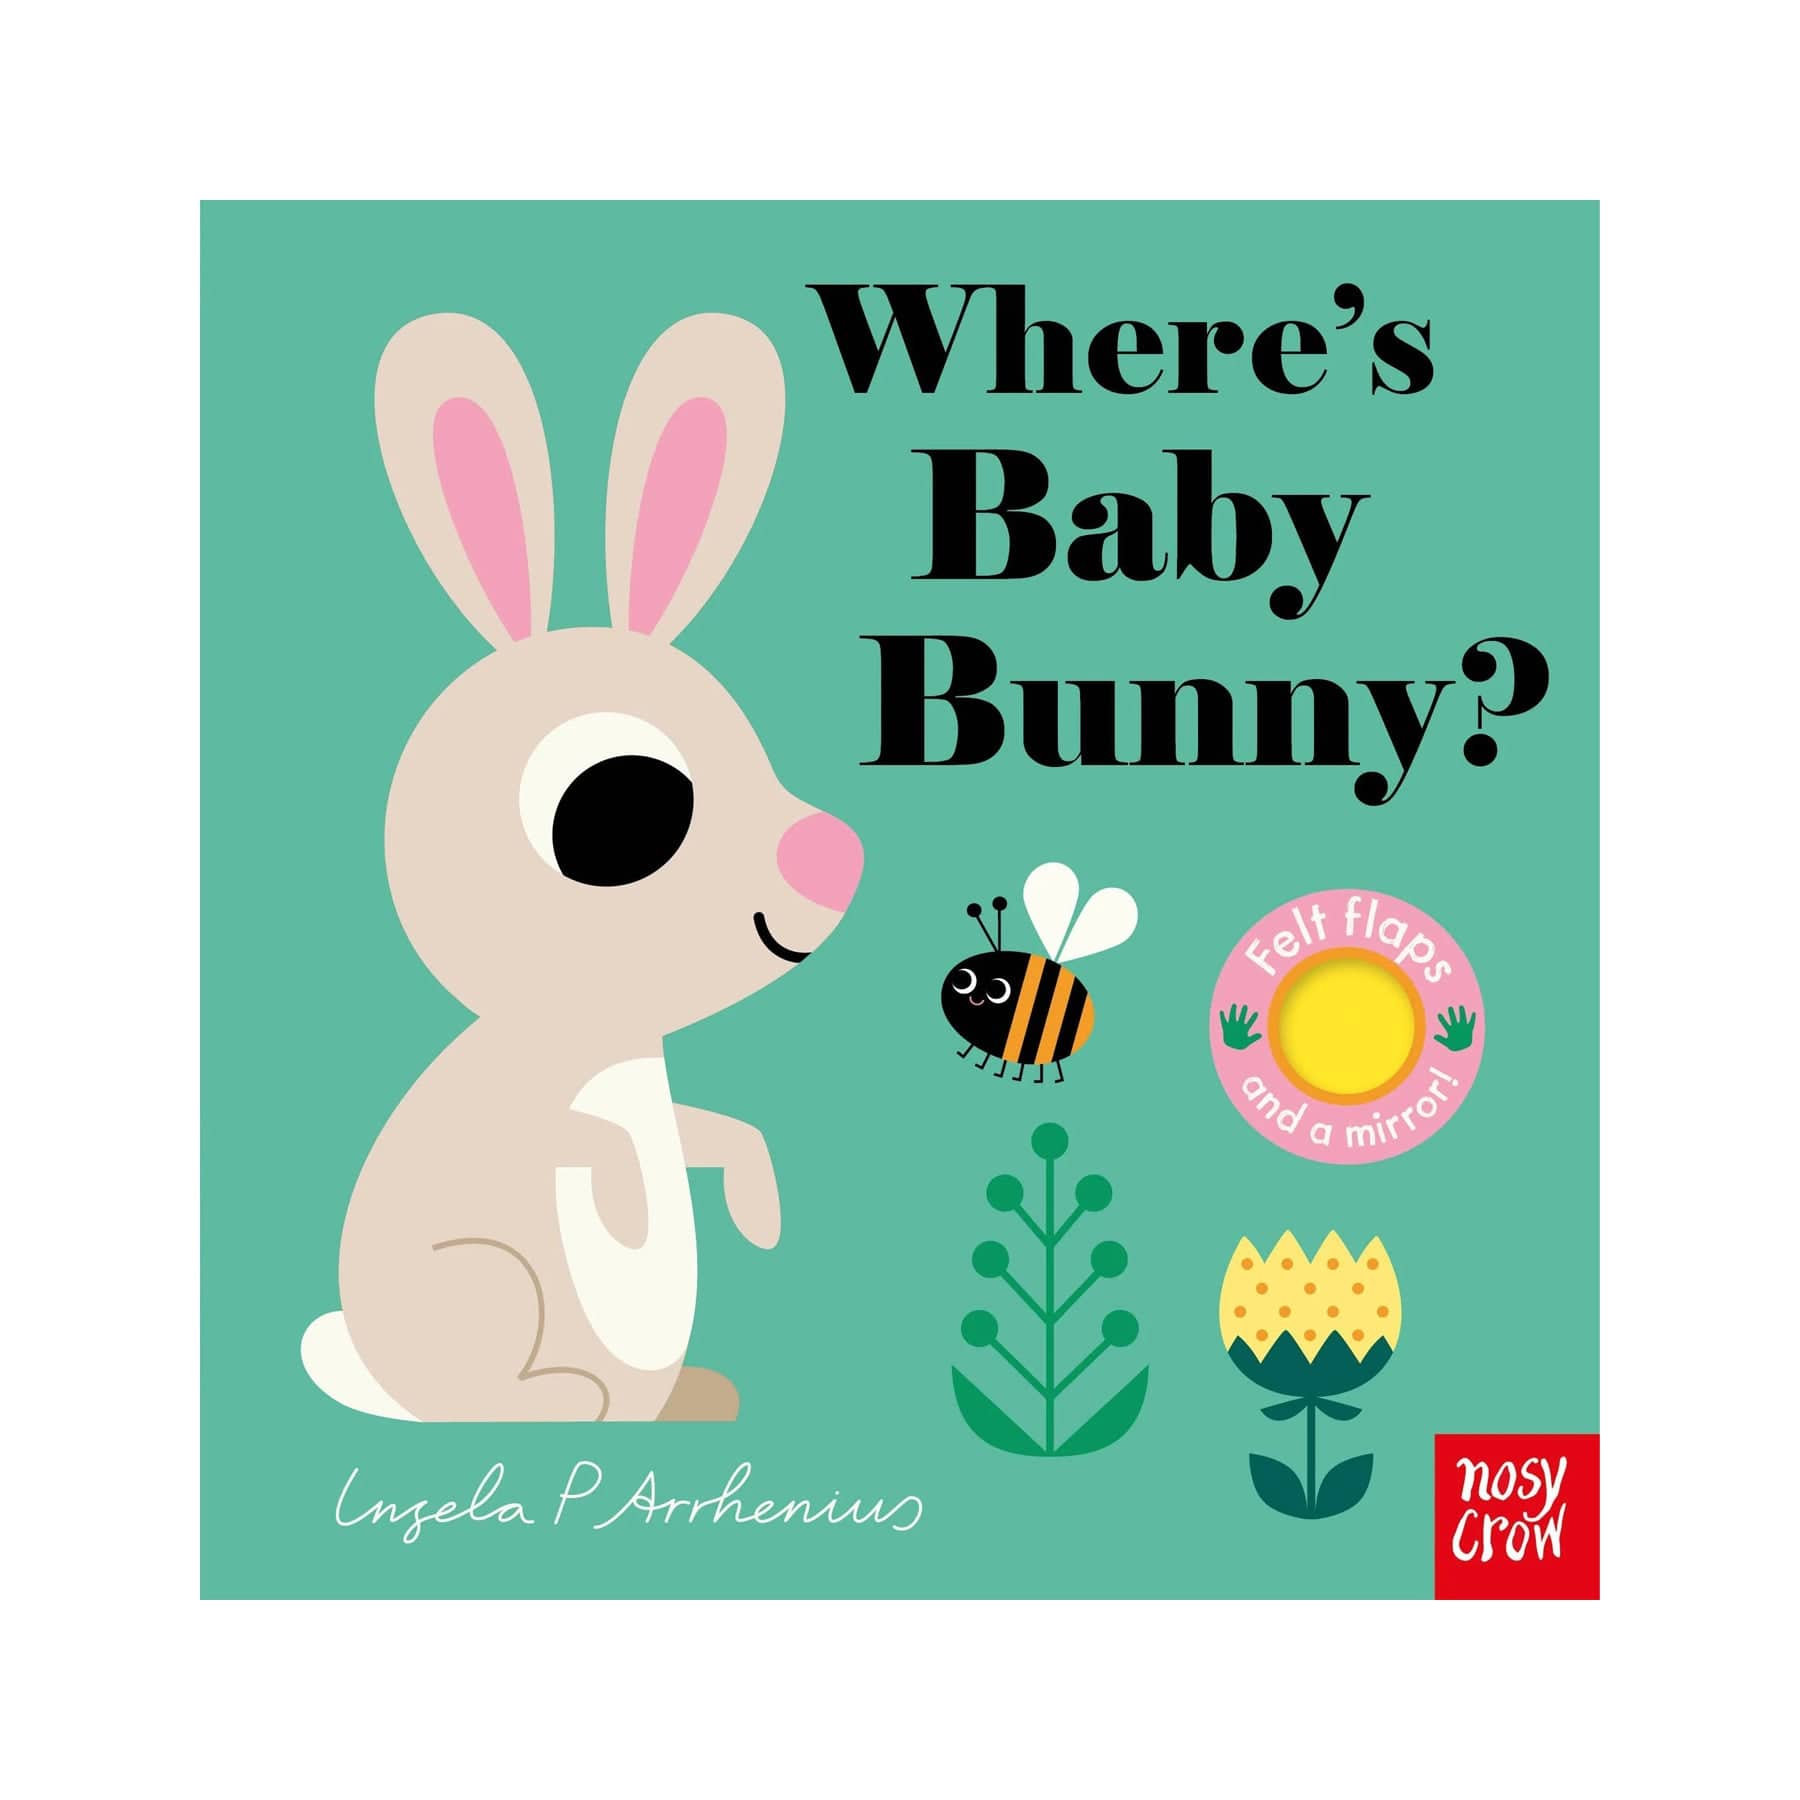 Where's baby bunny?